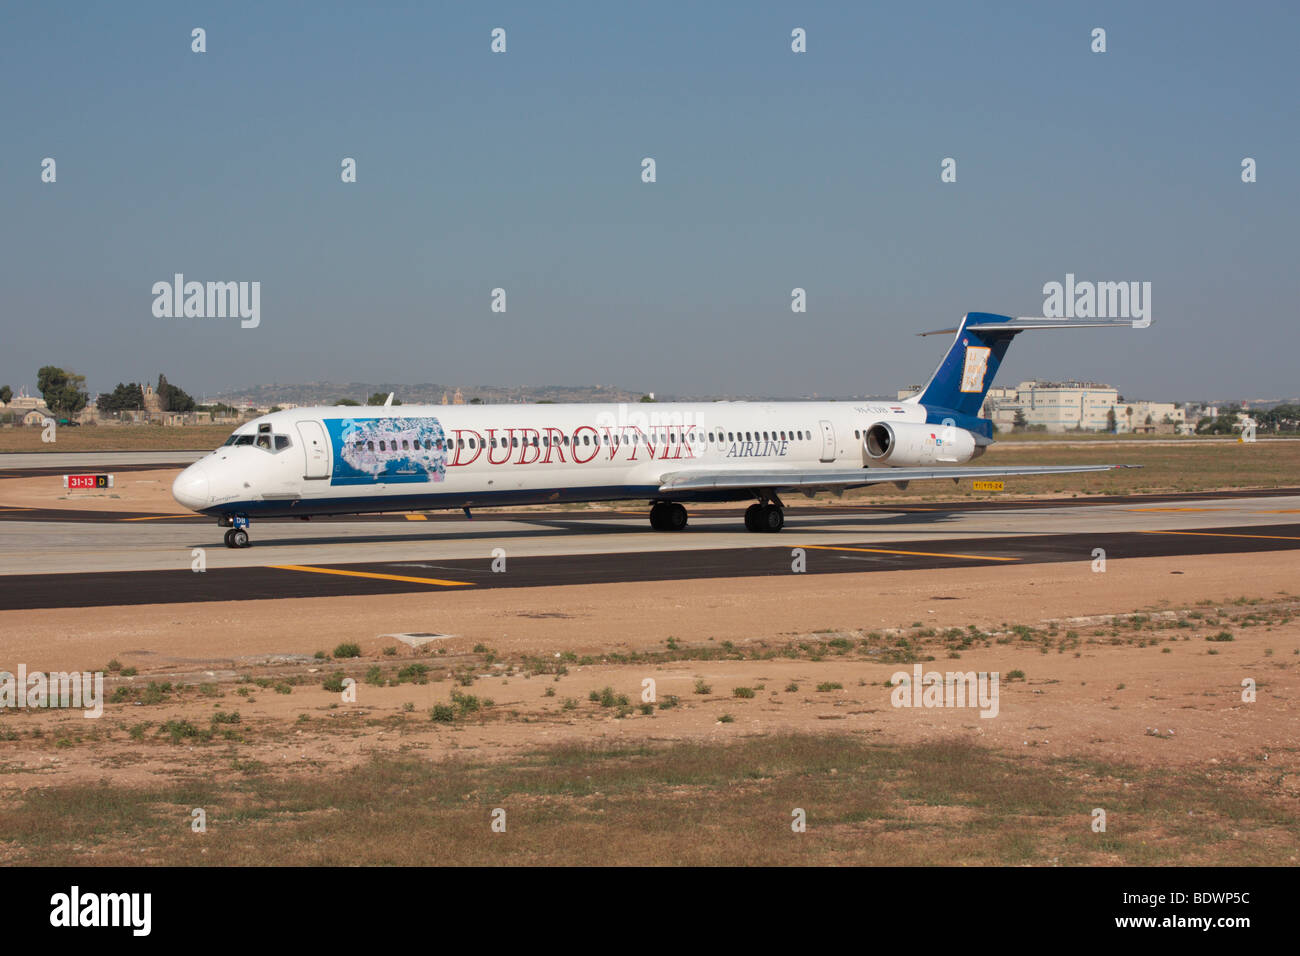 Dubrovnik Airline MD-83 des Rollens bei Abreise Stockfoto